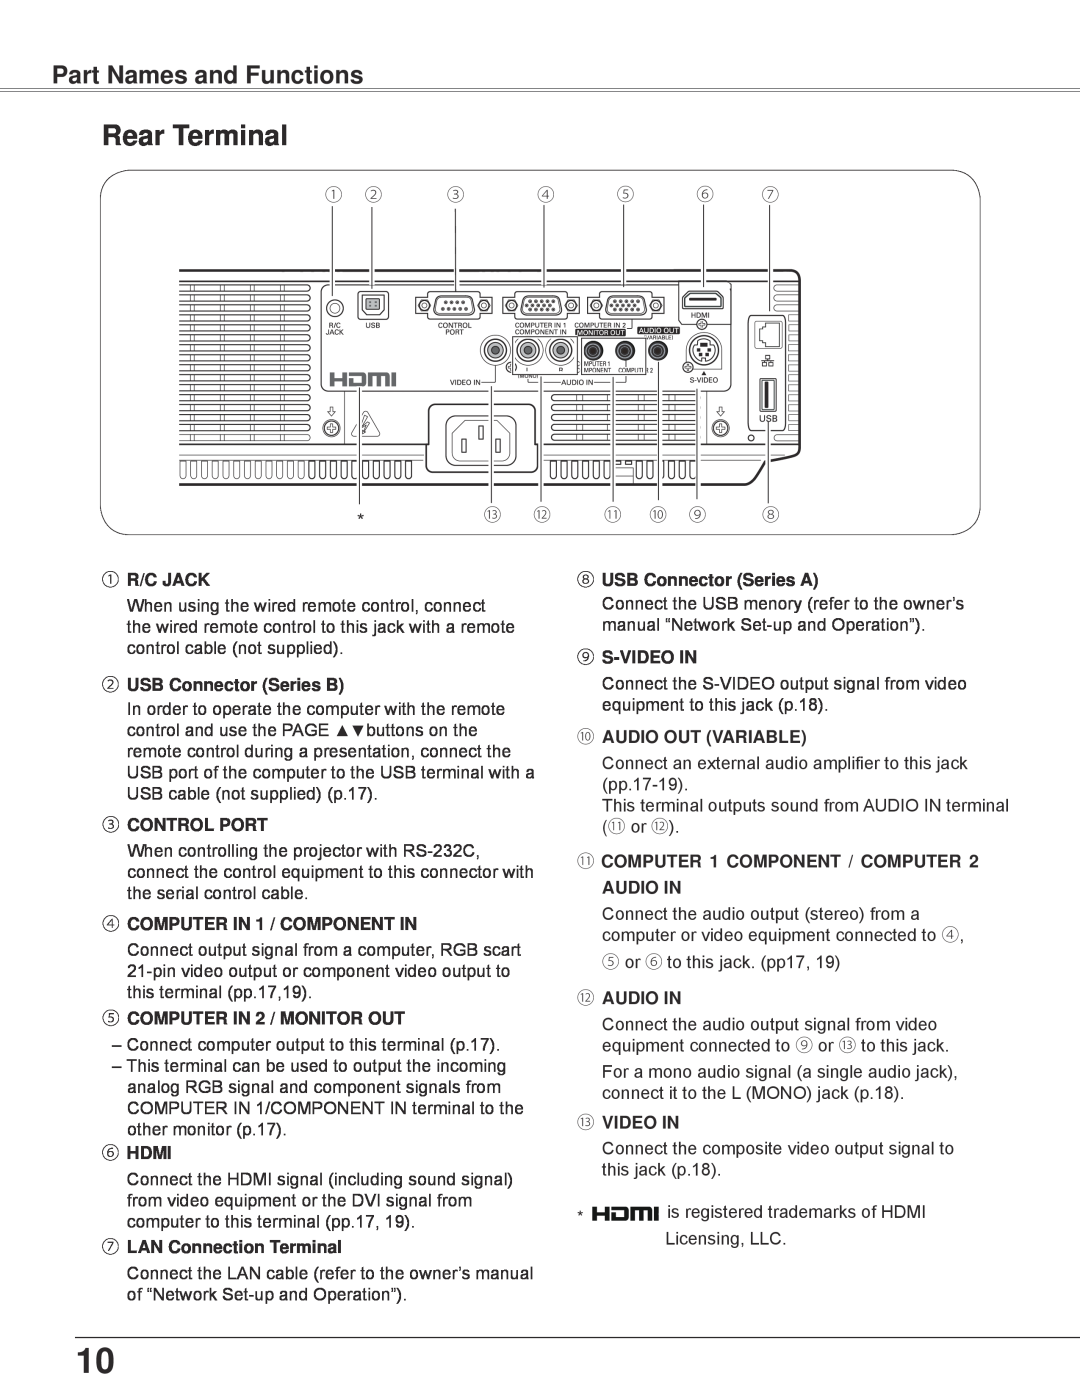 Sanyo PLC-WXU700 Rear Terminal, Part Names and Functions, ① R/C JACK, ② USB Connector Series B, ③ CONTROL PORT, ⑥ HDMI 